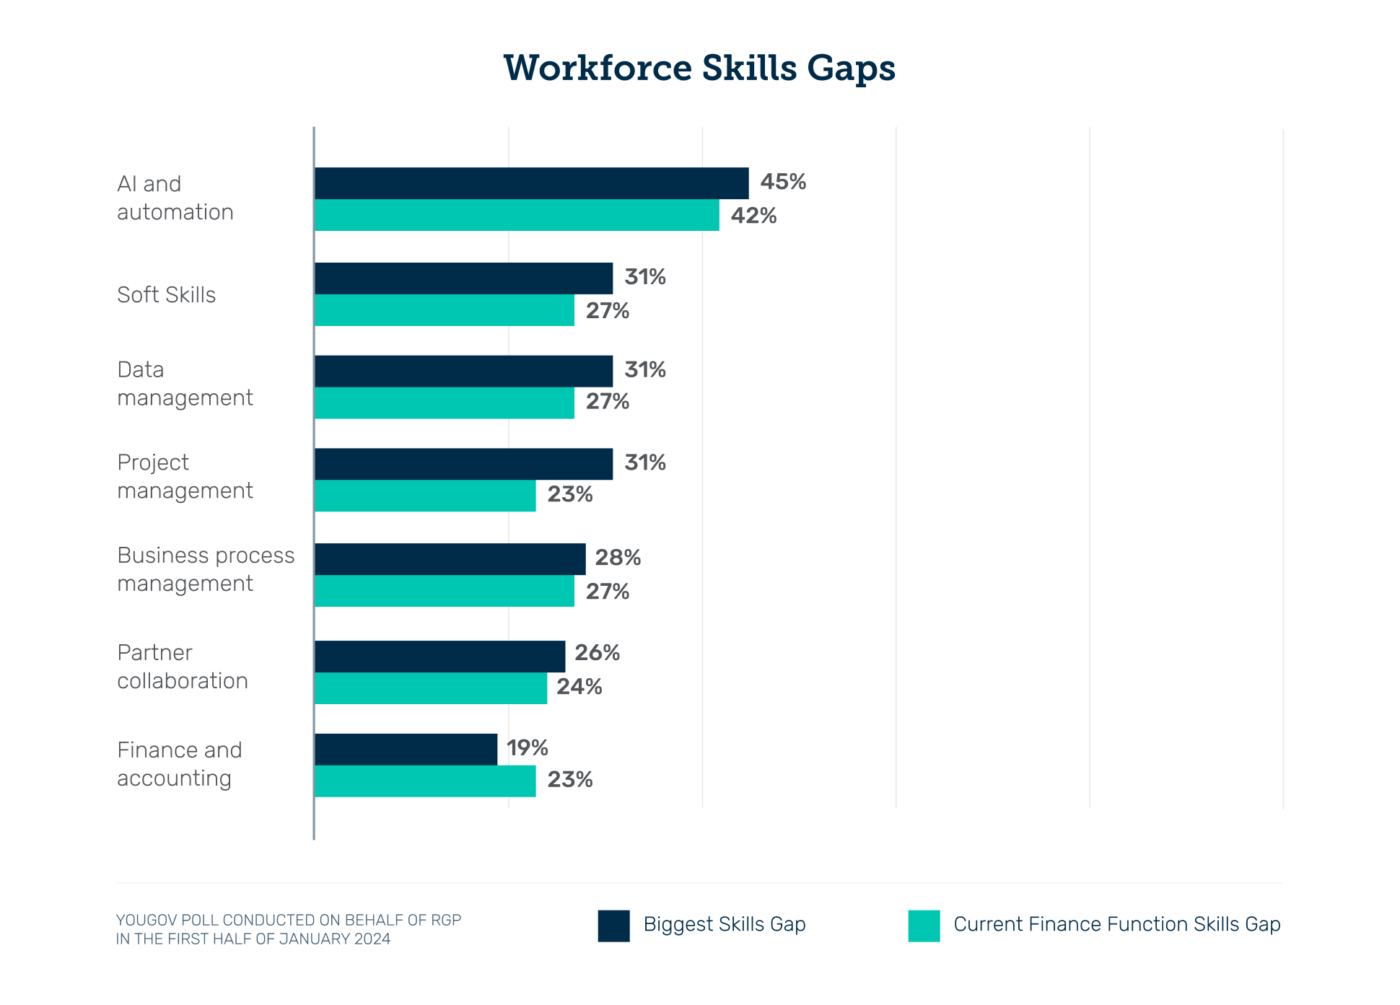 Workforce skills gaps